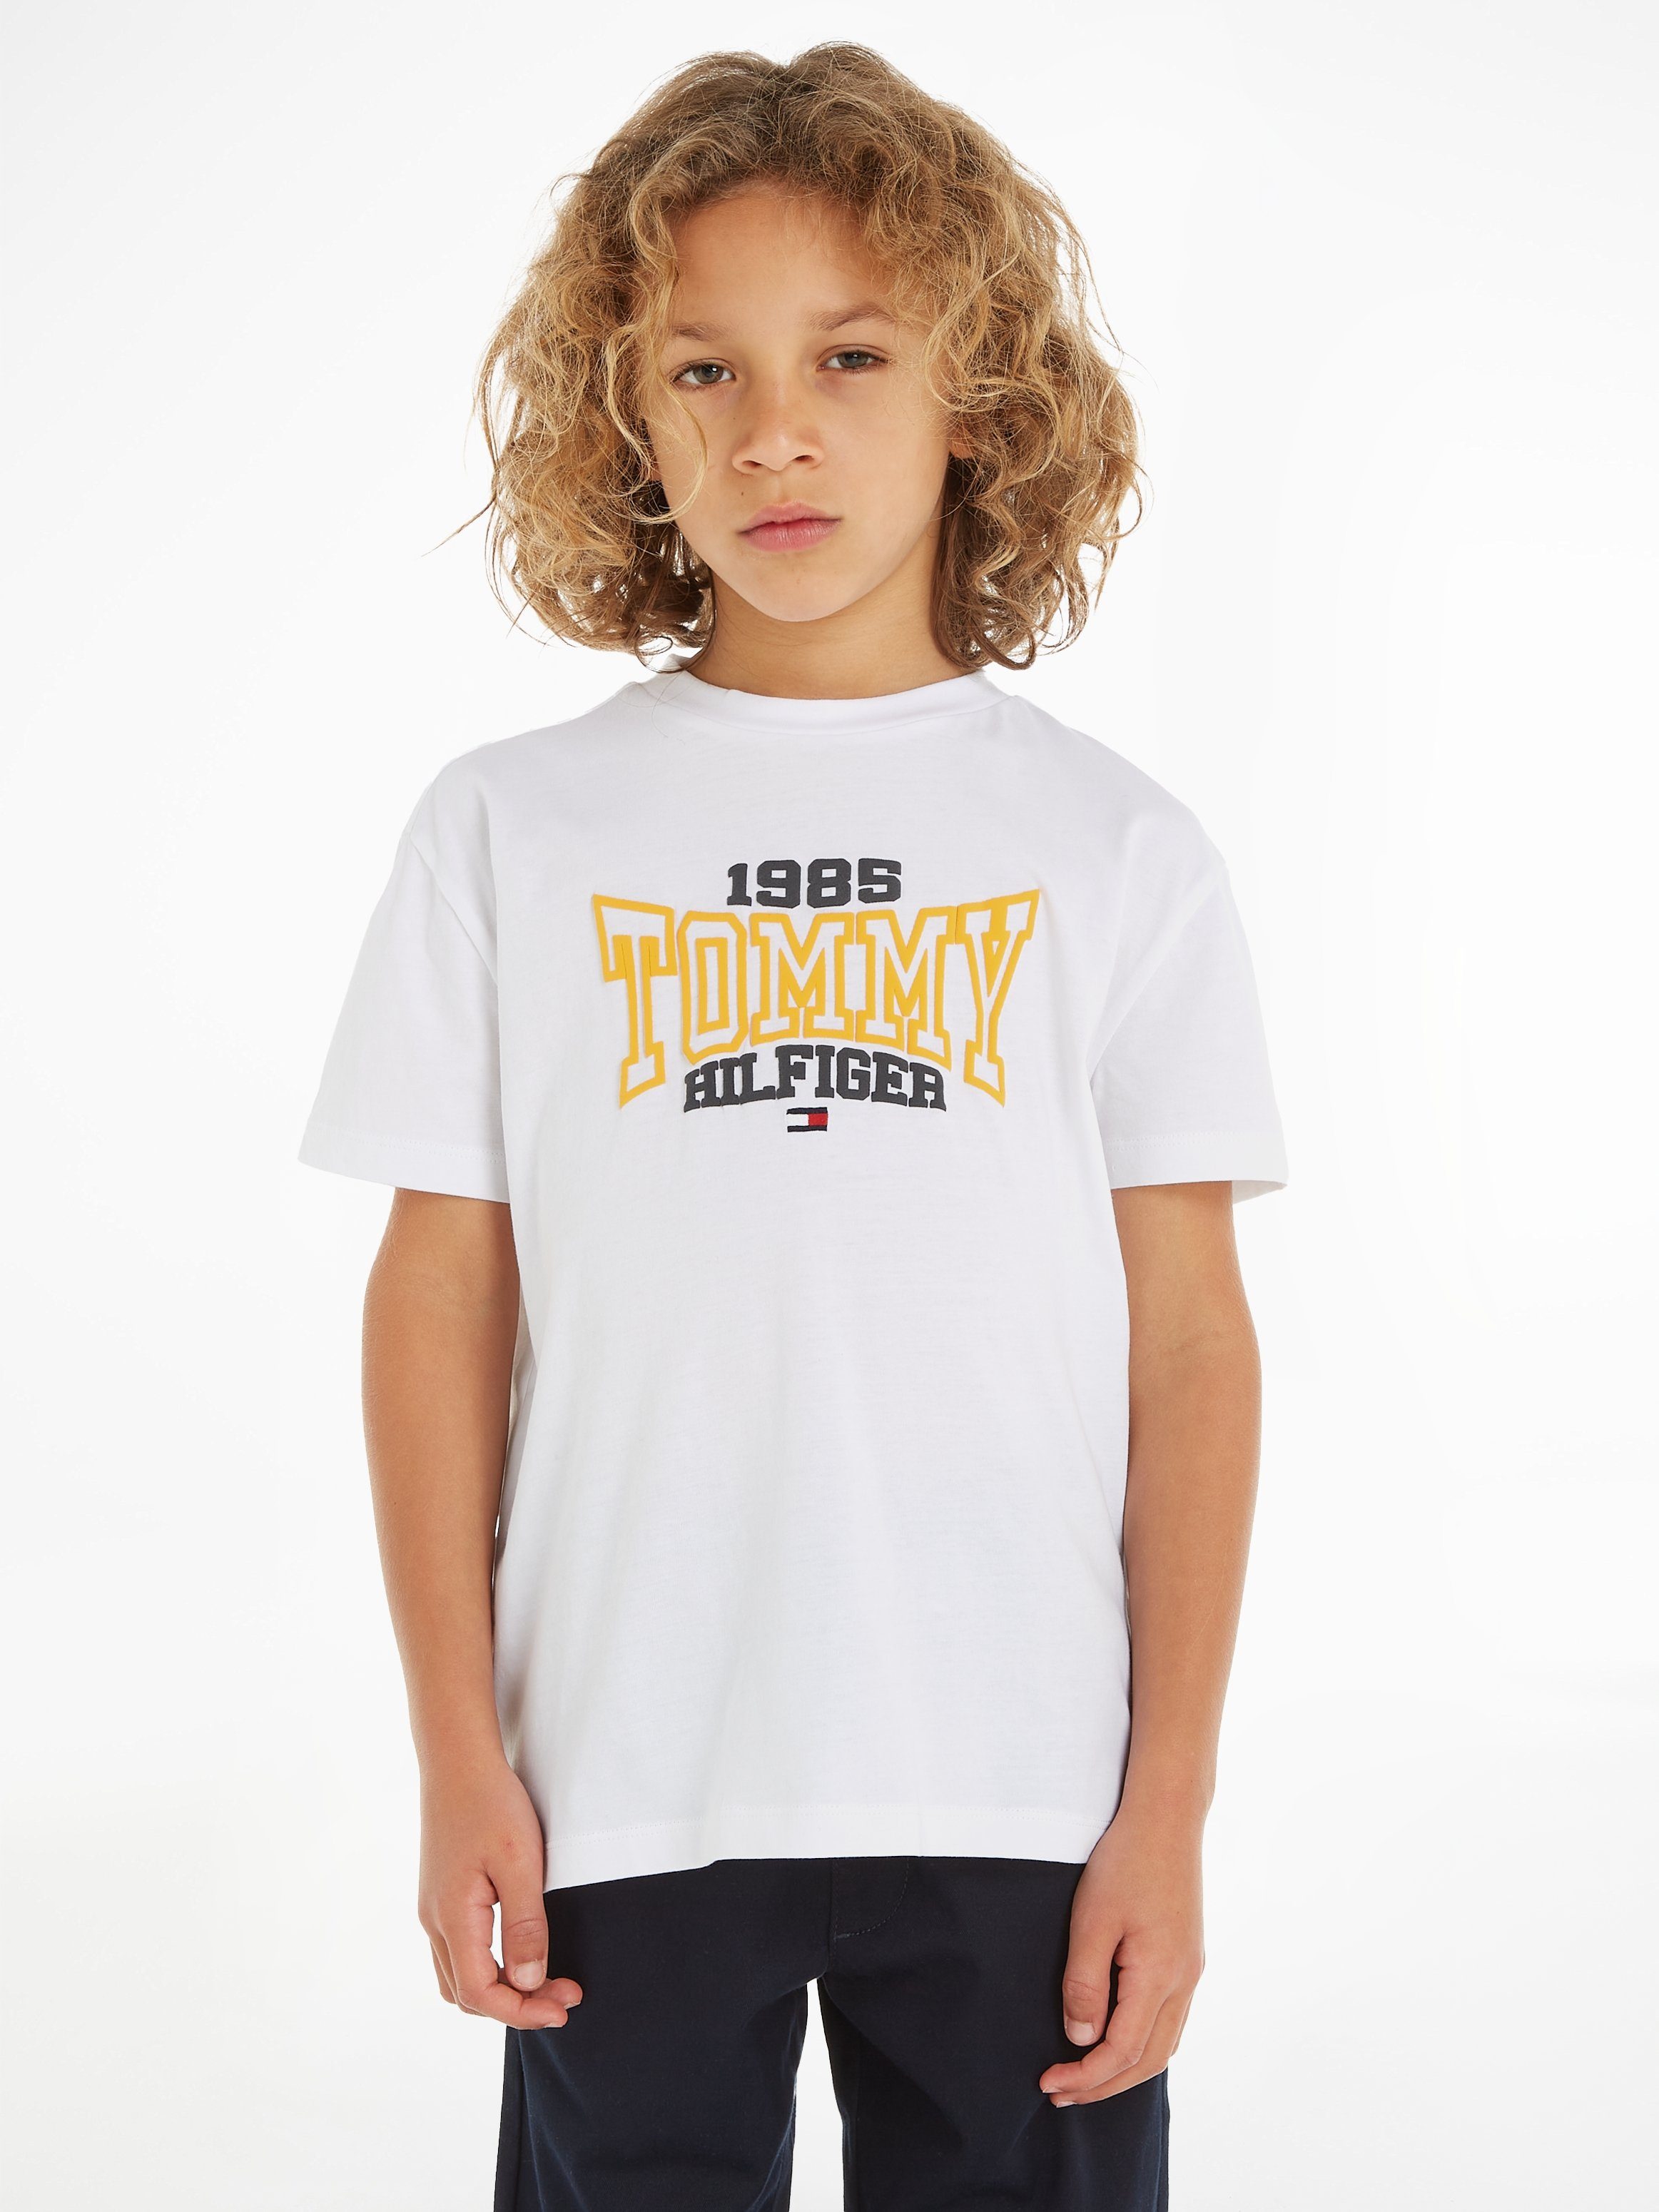 [Kostenloser Umtauschversand] Hilfgier VARSITY modischem Hilfiger Tommy White Tommy T-Shirt TEE 1985 Print mit TOMMY Varsity S/S 1985